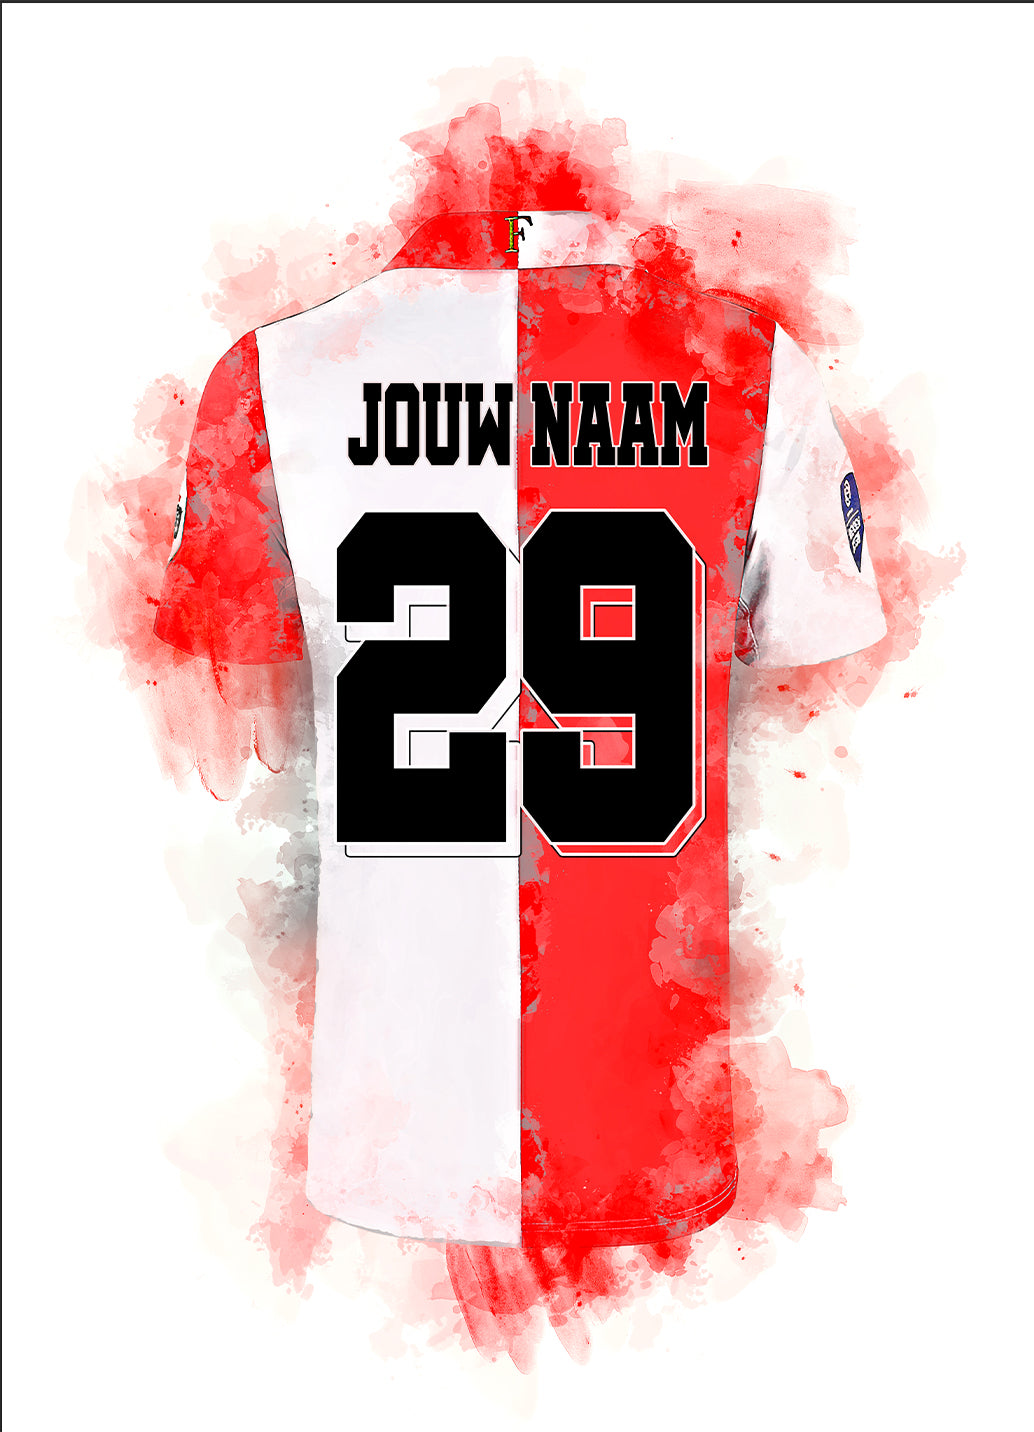 Feyenoord voetbalposter met eigen naam en rugnummer